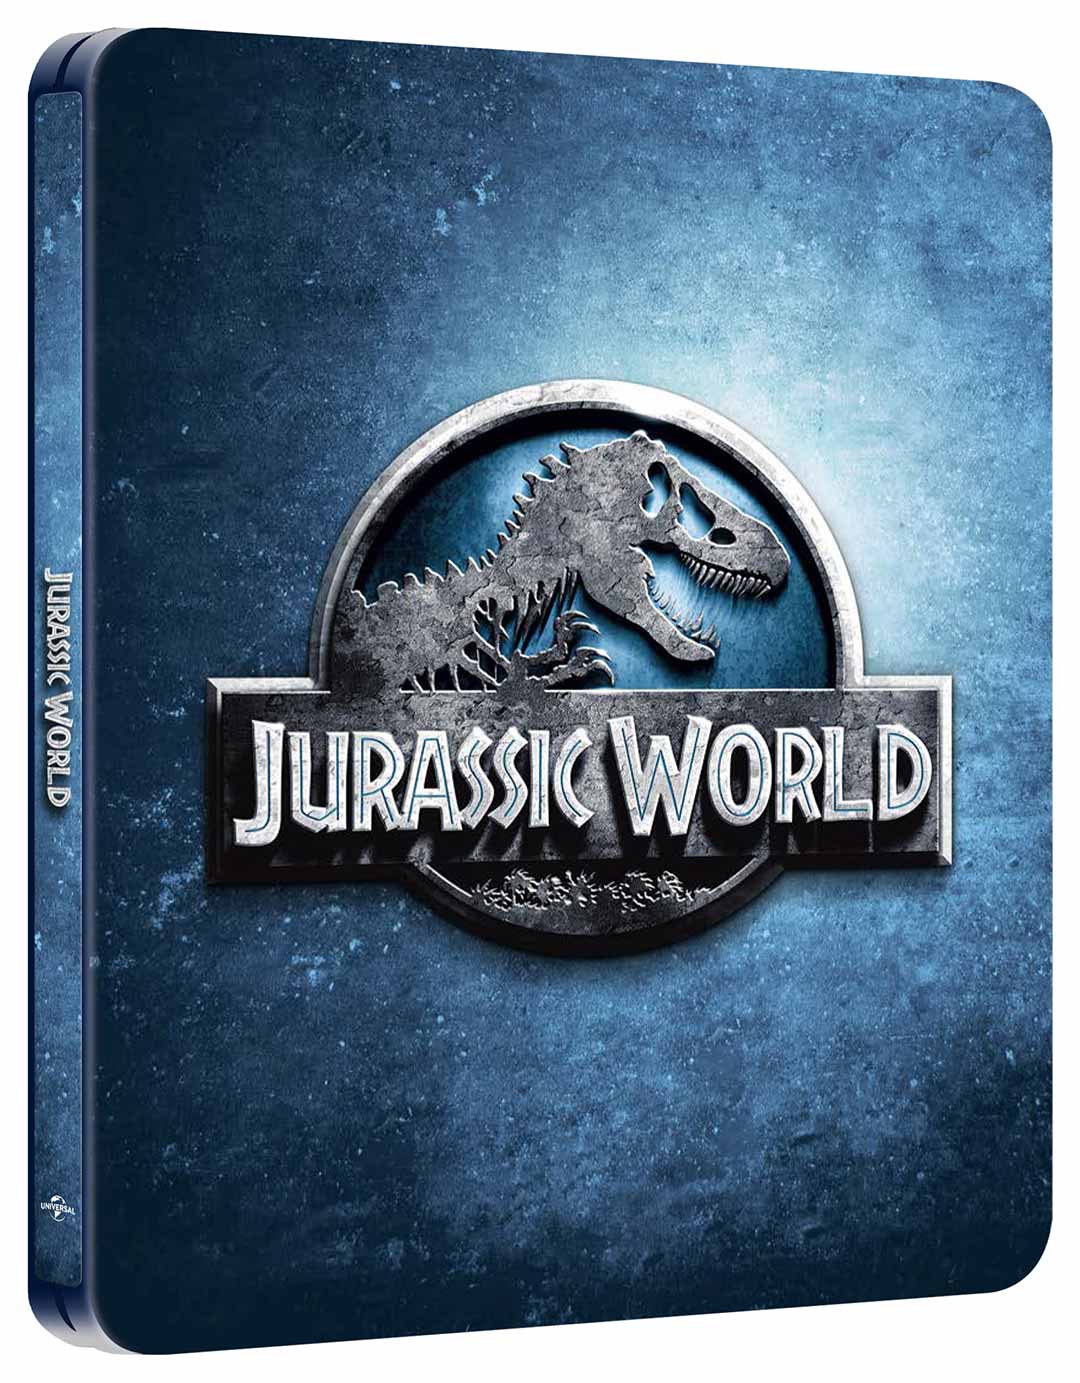 Jurassic World - Steelbook Limited Edition 4K Ultra HD + Blu-ray (Blu-ray) Image 2